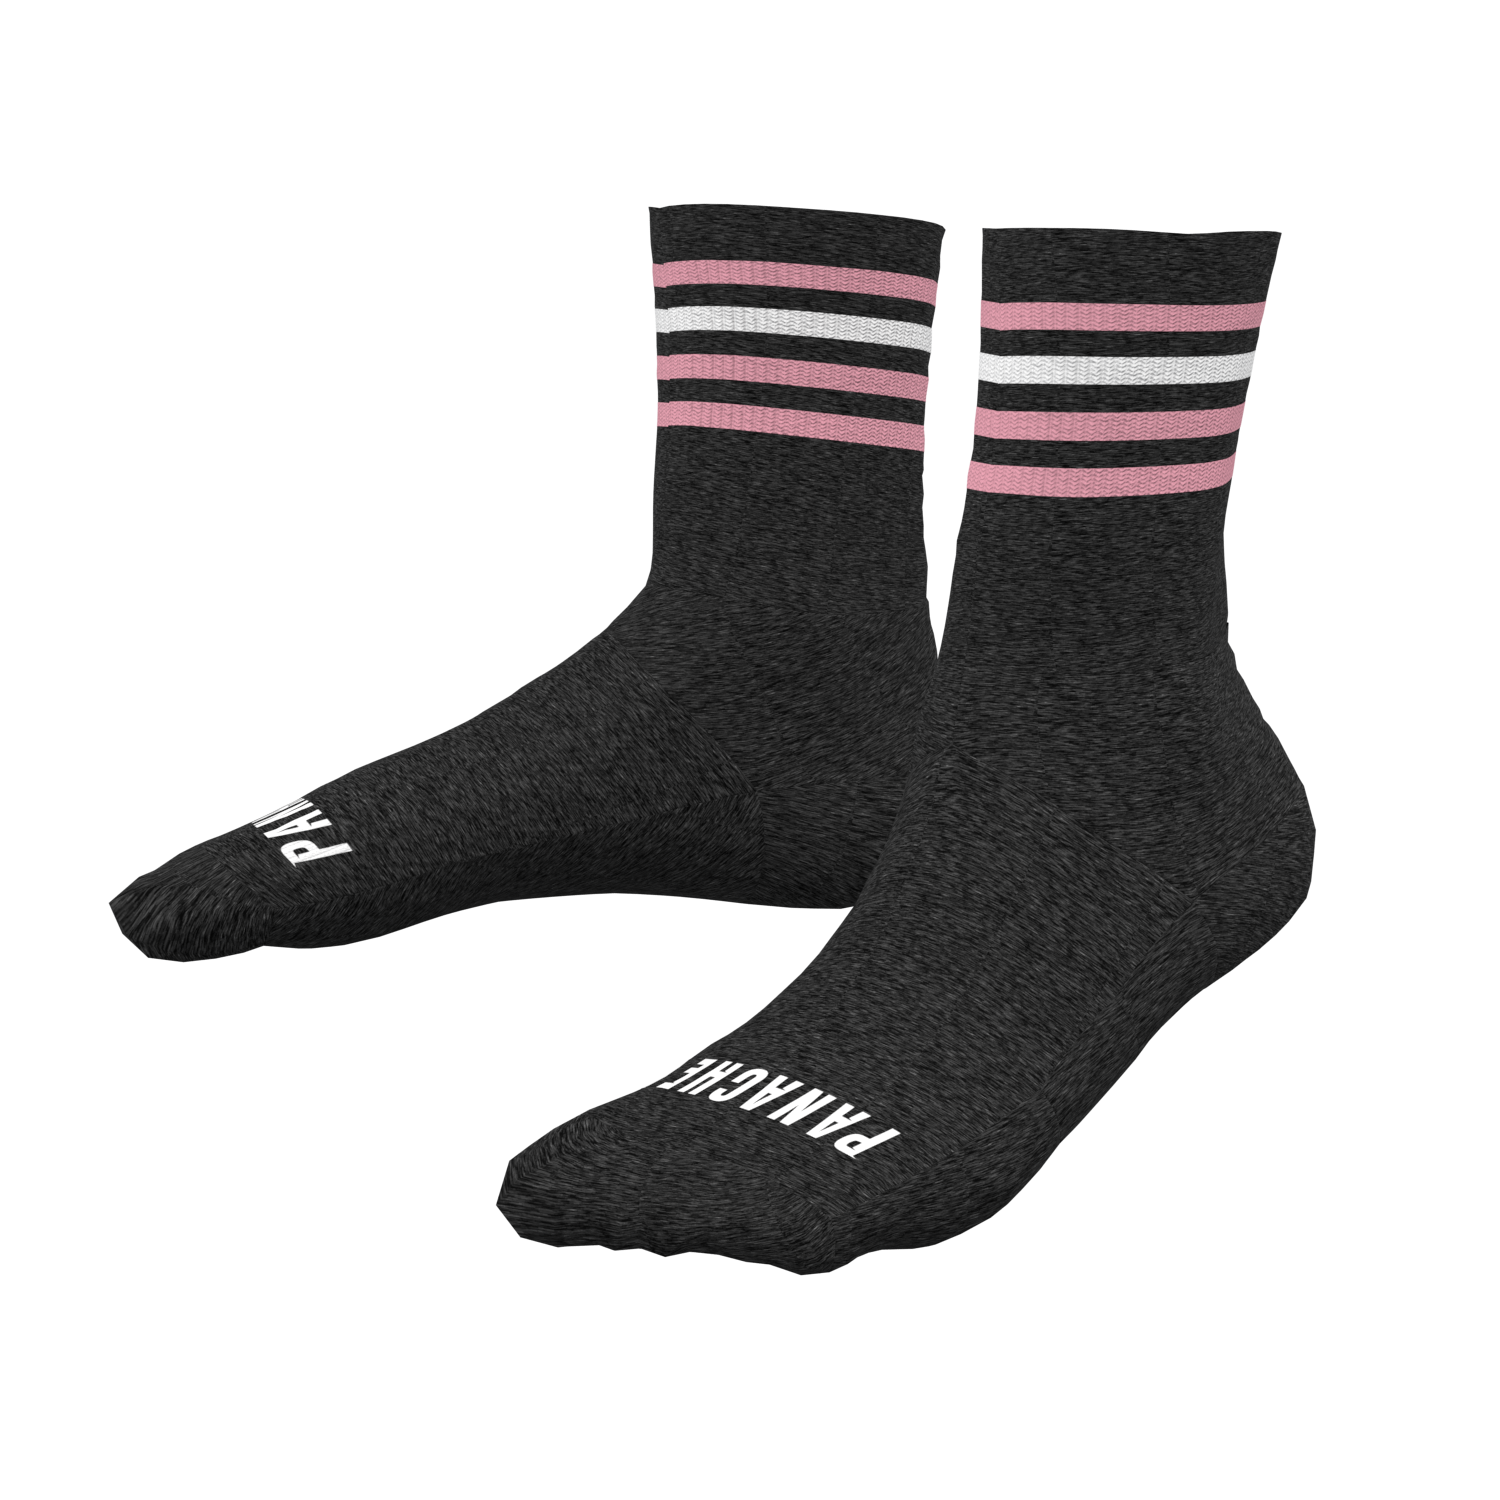 Growdy Merino Wool Socks - CHARCOAL with Pink/White stripes